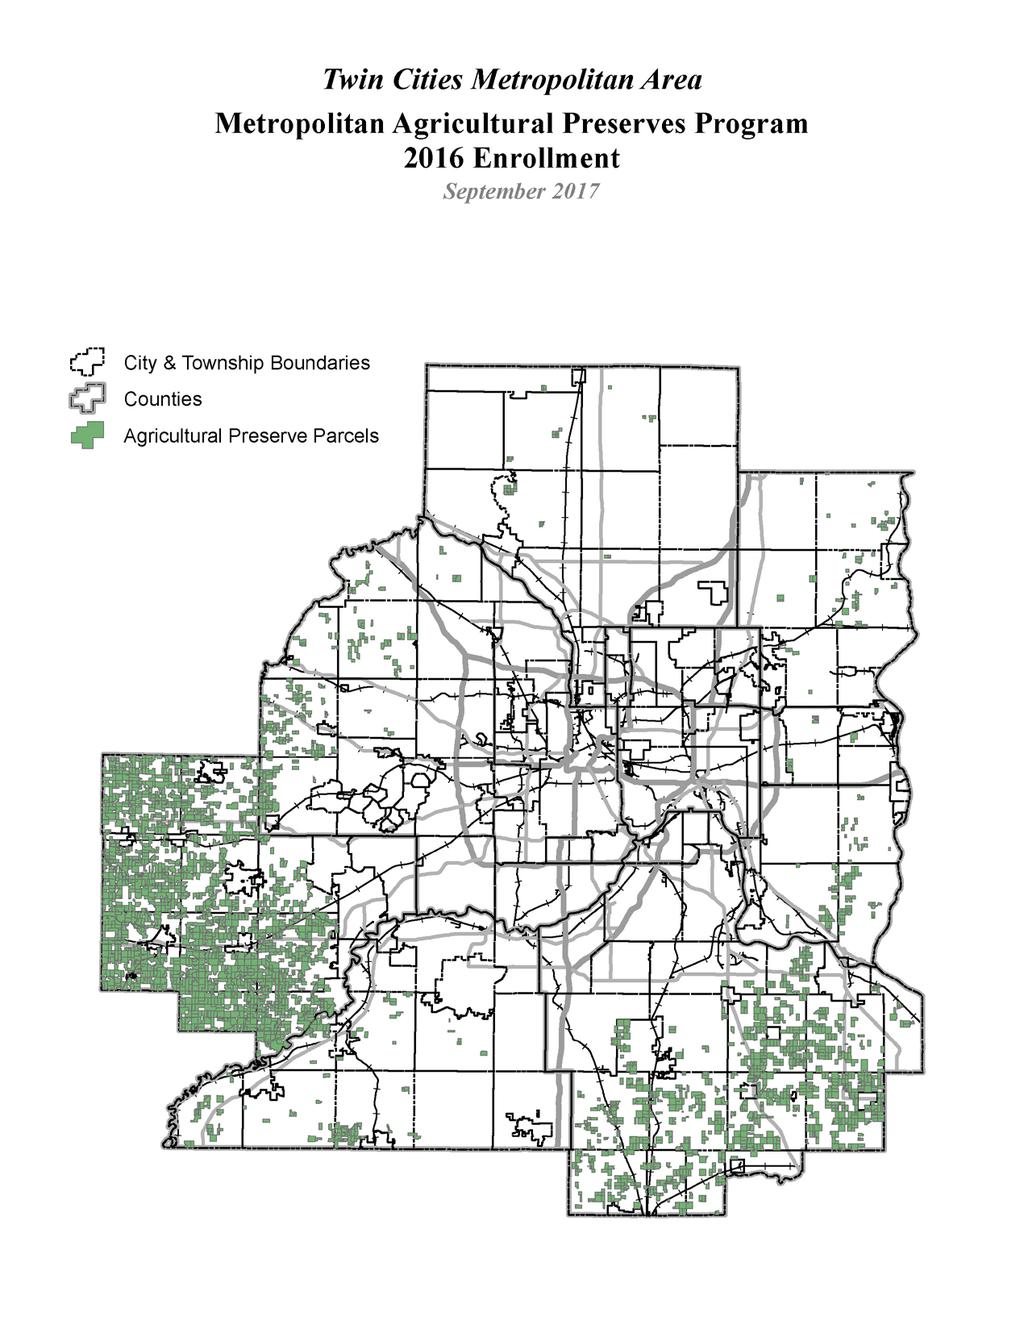 Twin Cities Metropolitan Area Metropolitan Agricultural Preserves